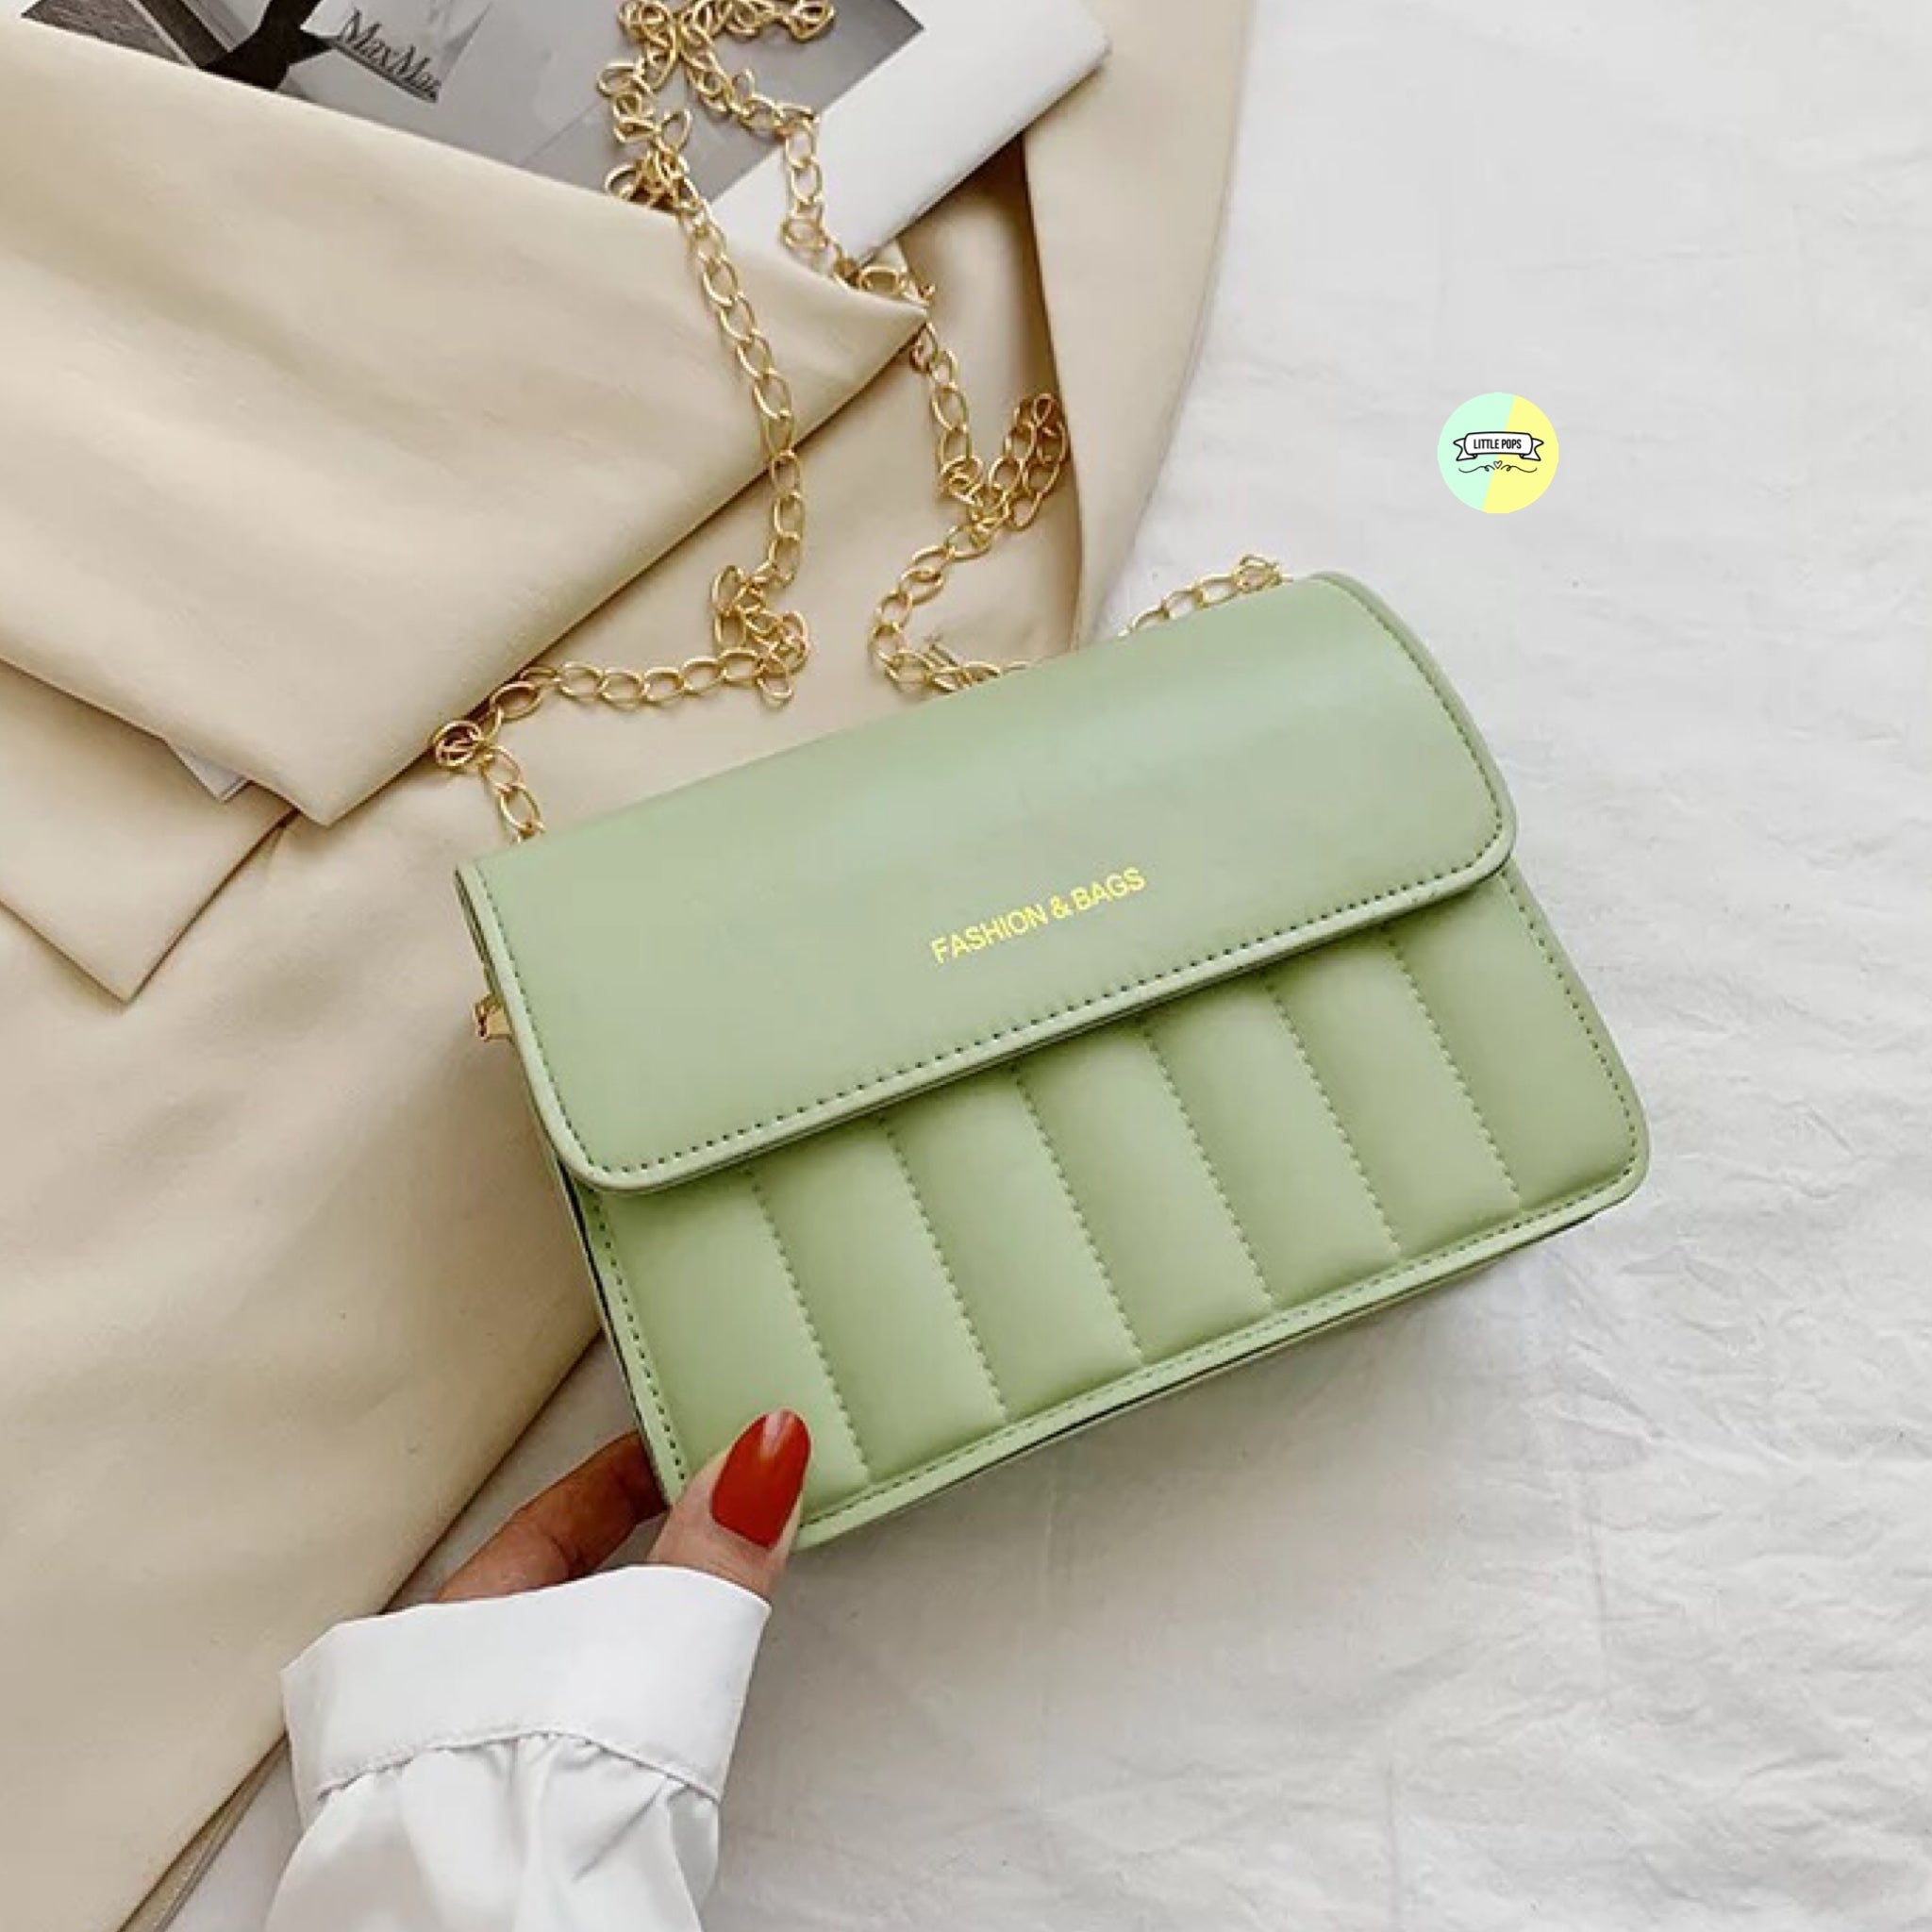 Beautiful Trending Handbag Purse For Women's and Girls